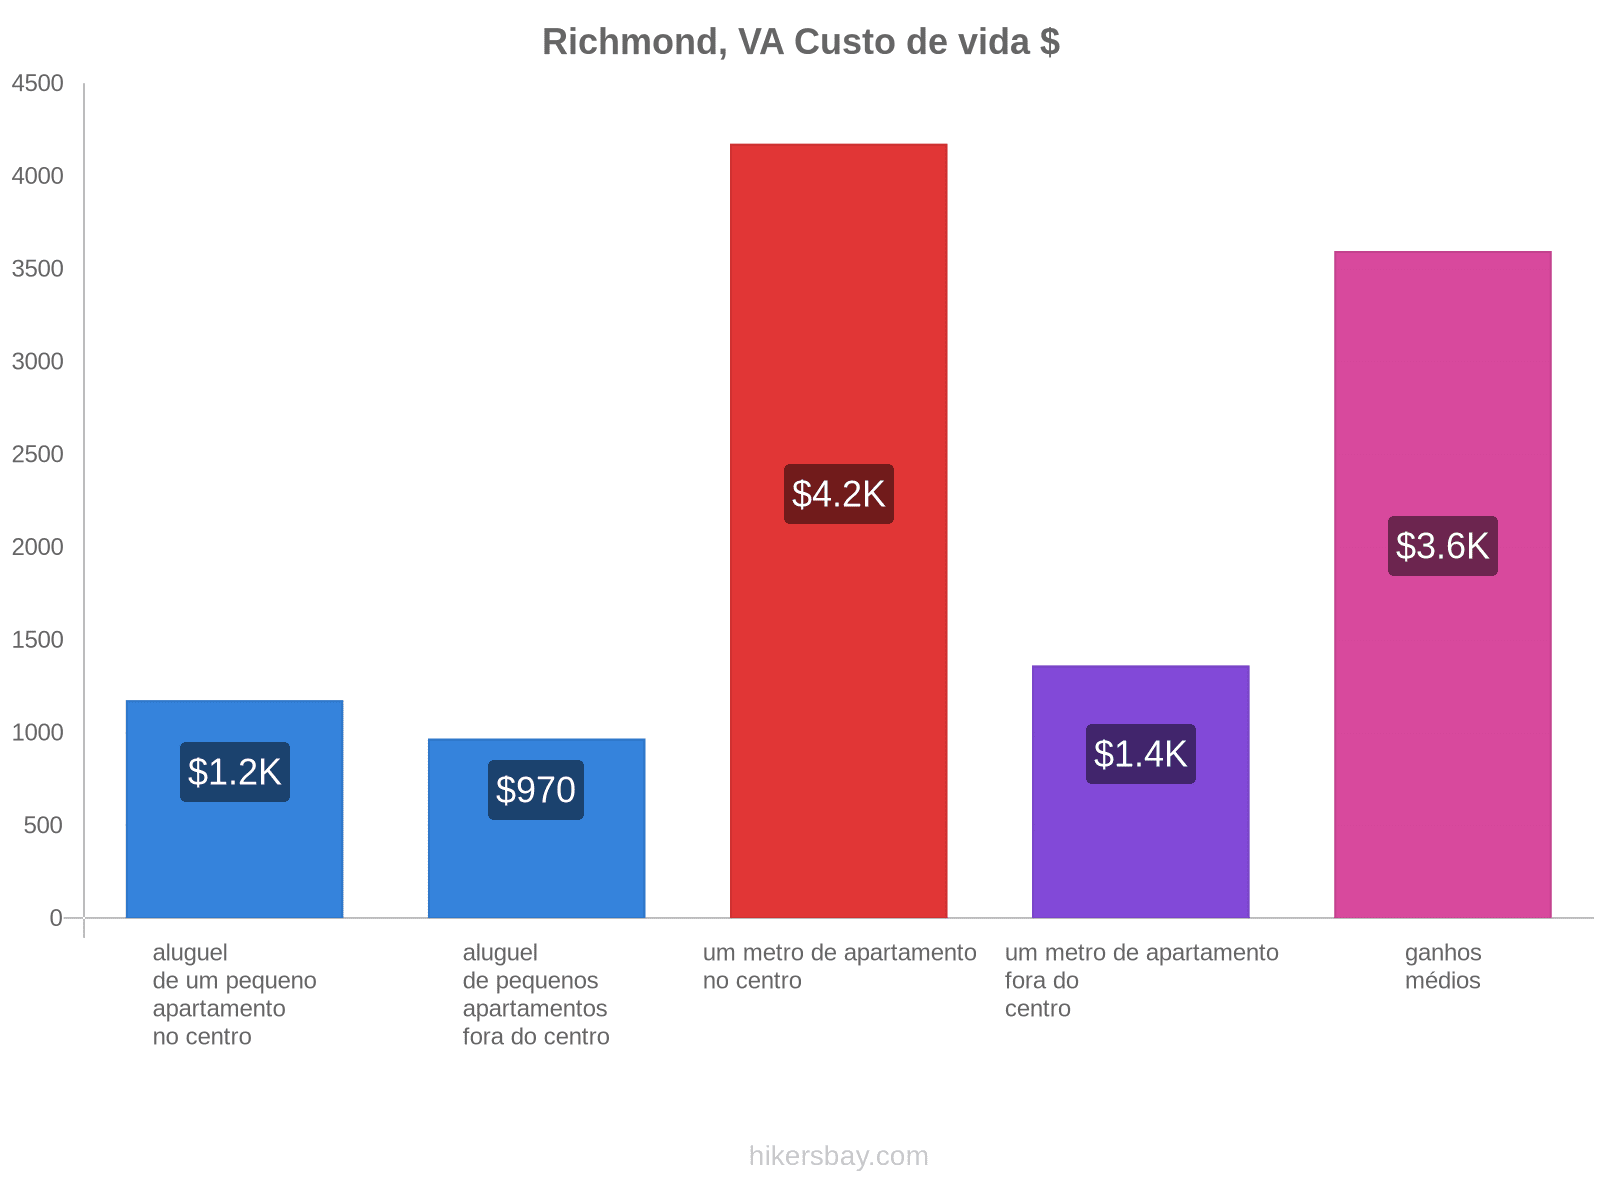 Richmond, VA custo de vida hikersbay.com